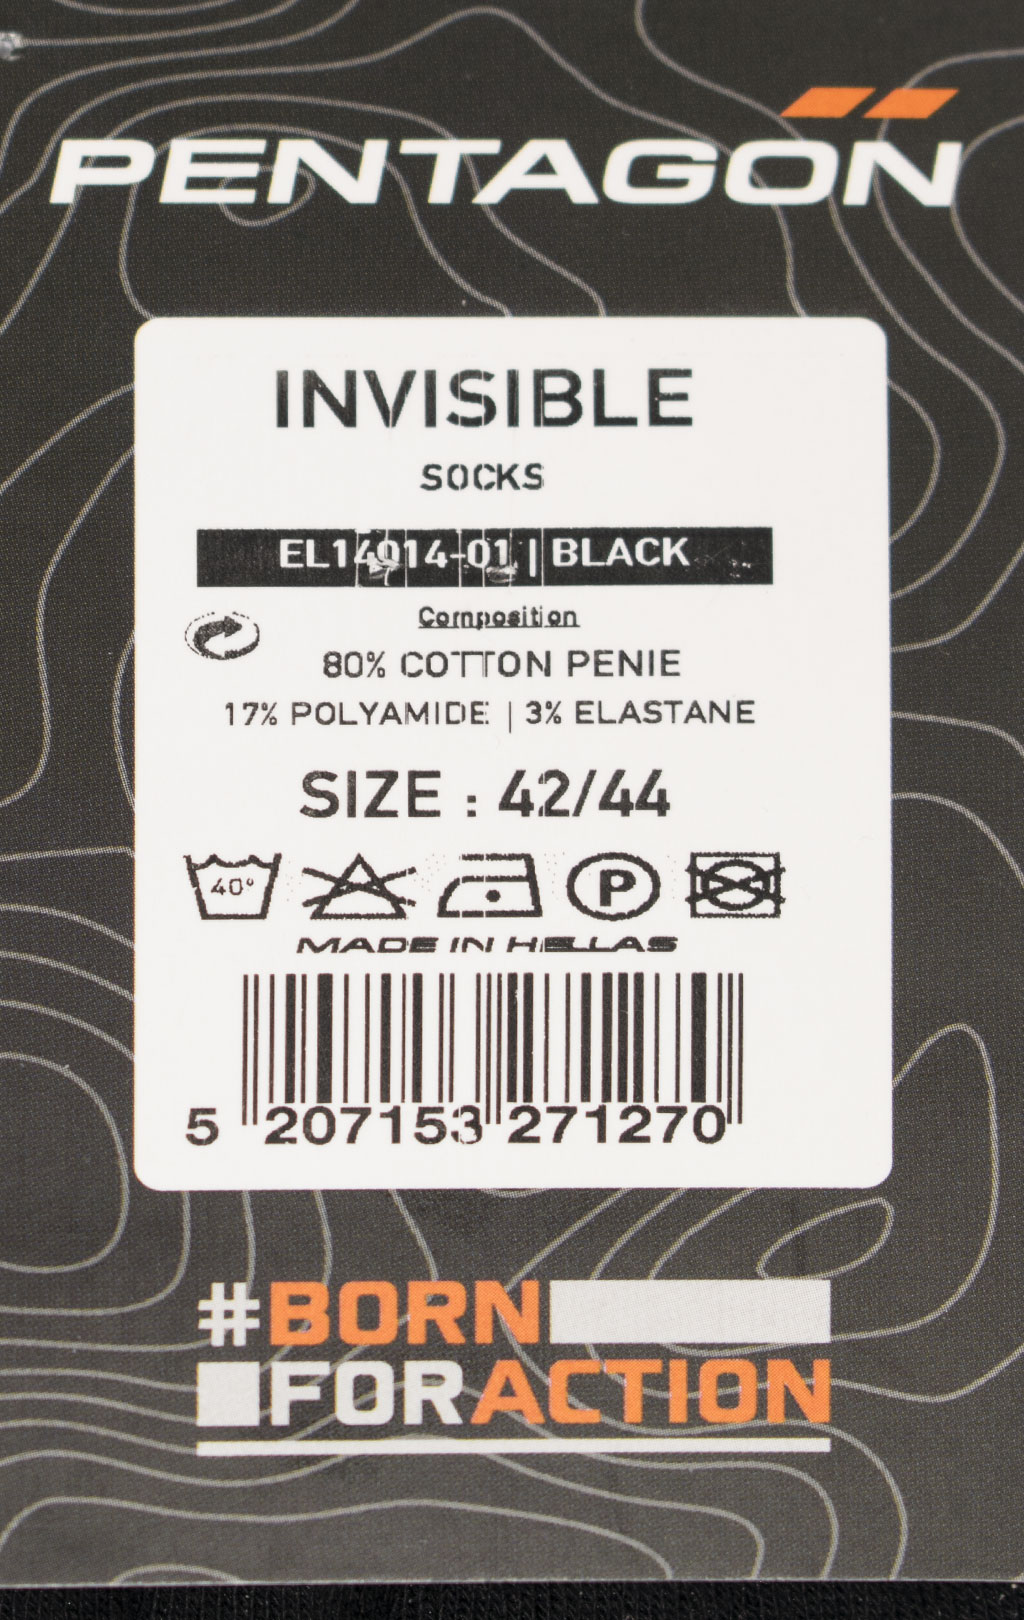 Носки низкие Pentagon INVISIBLE black 14014 